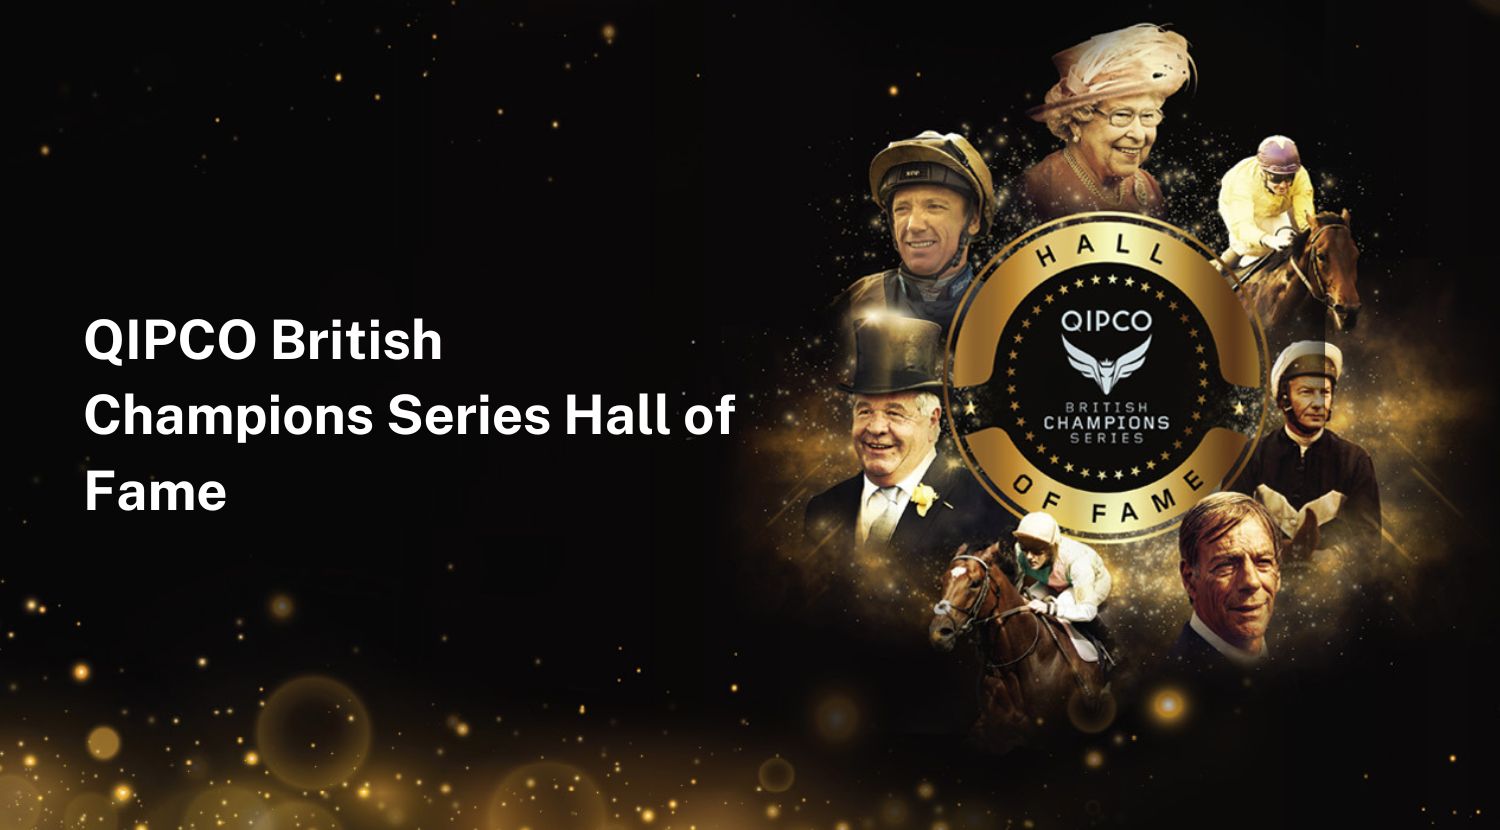 QIPCO British Champions Series Hall of Fame